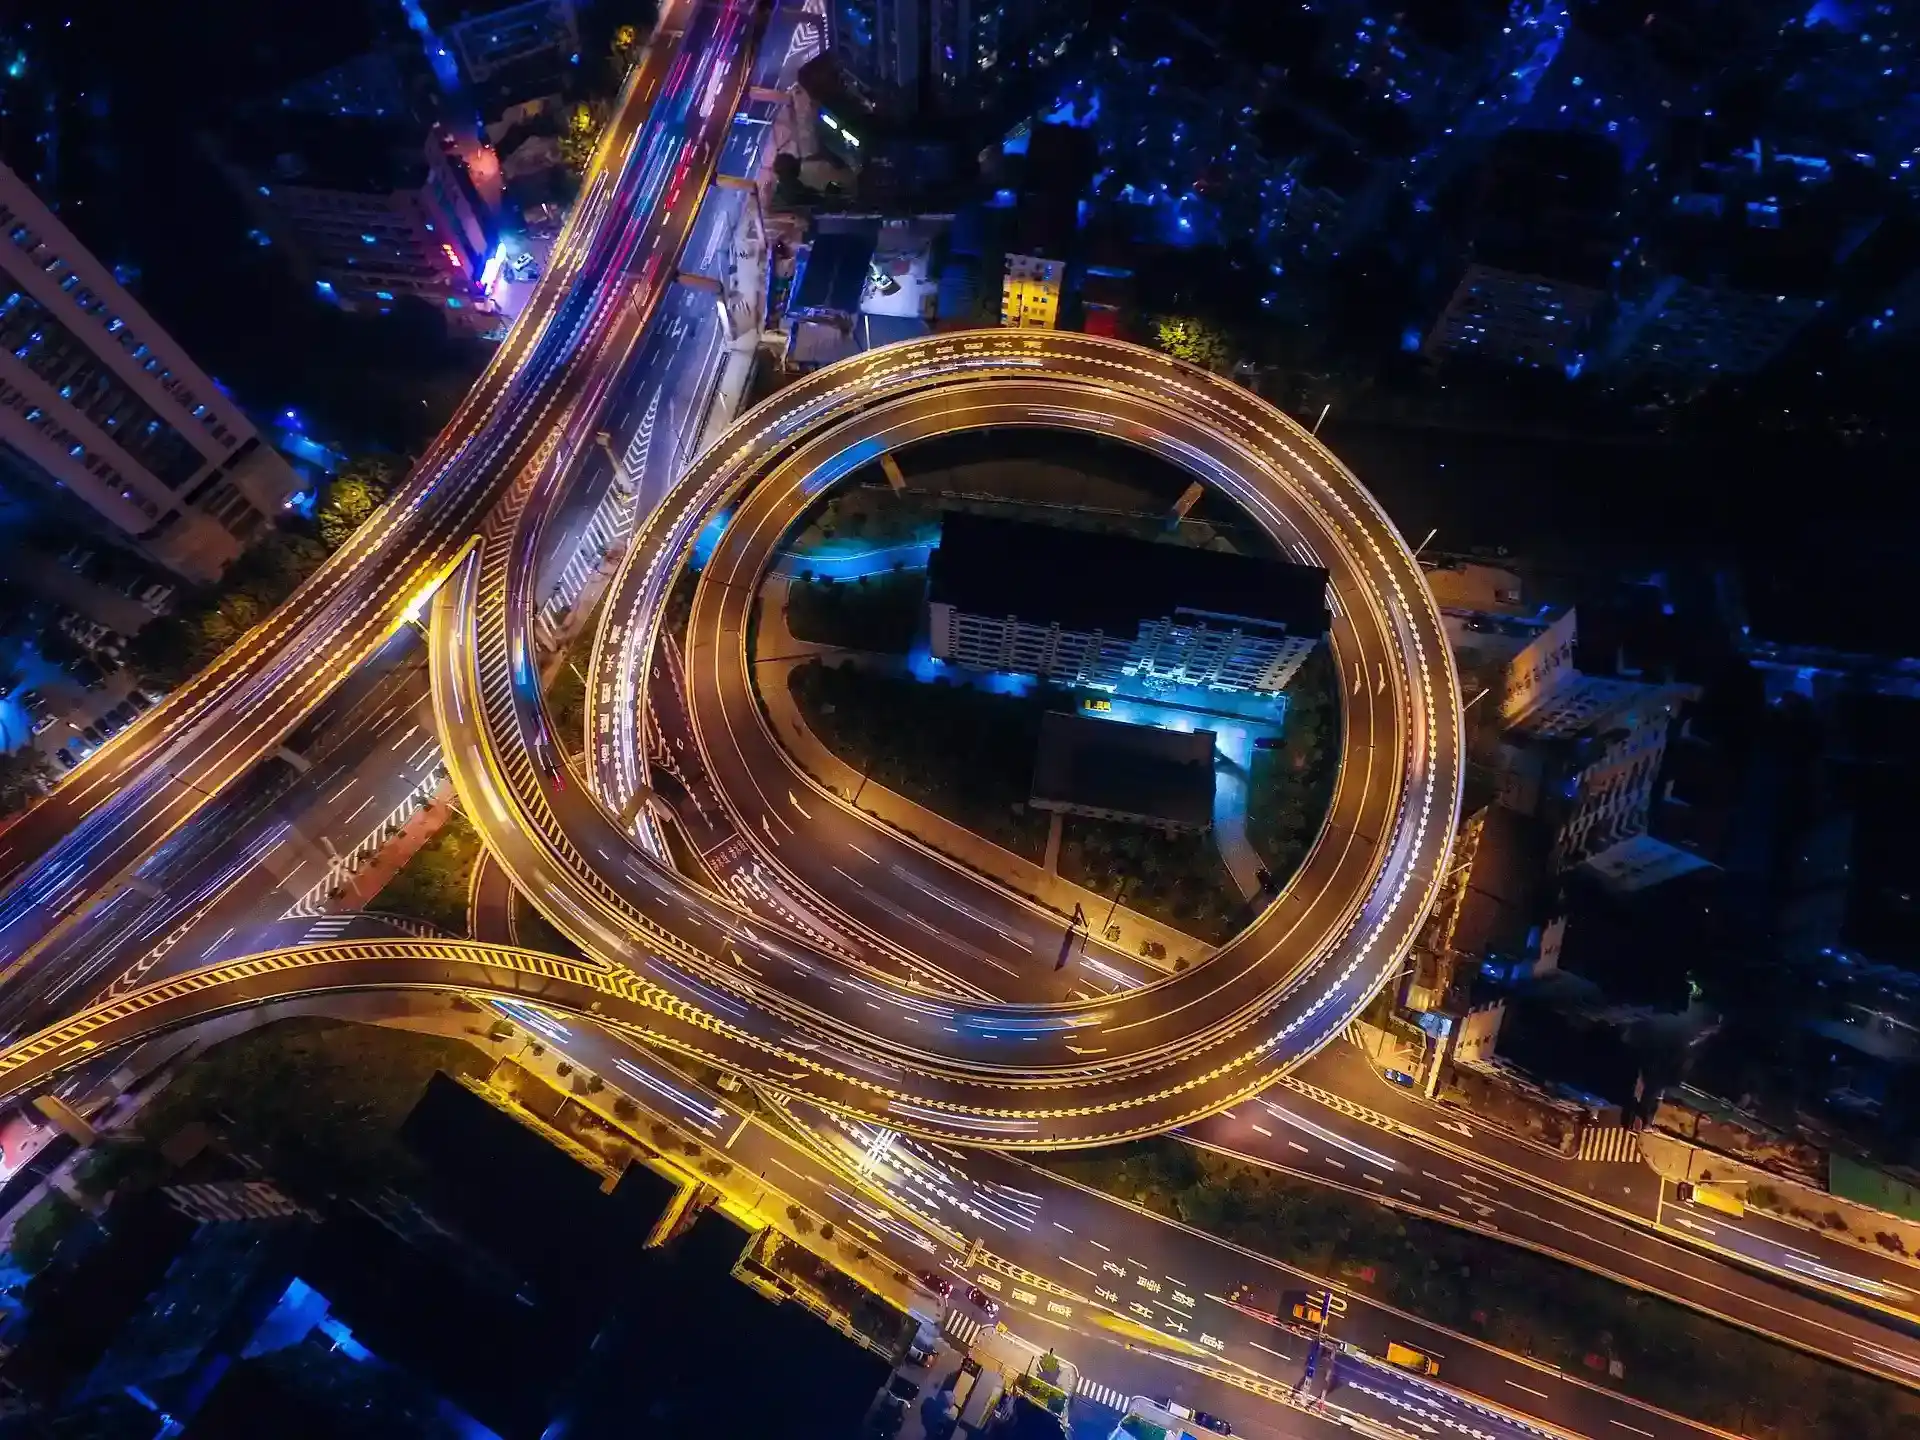 Highway interchange at night with traffic